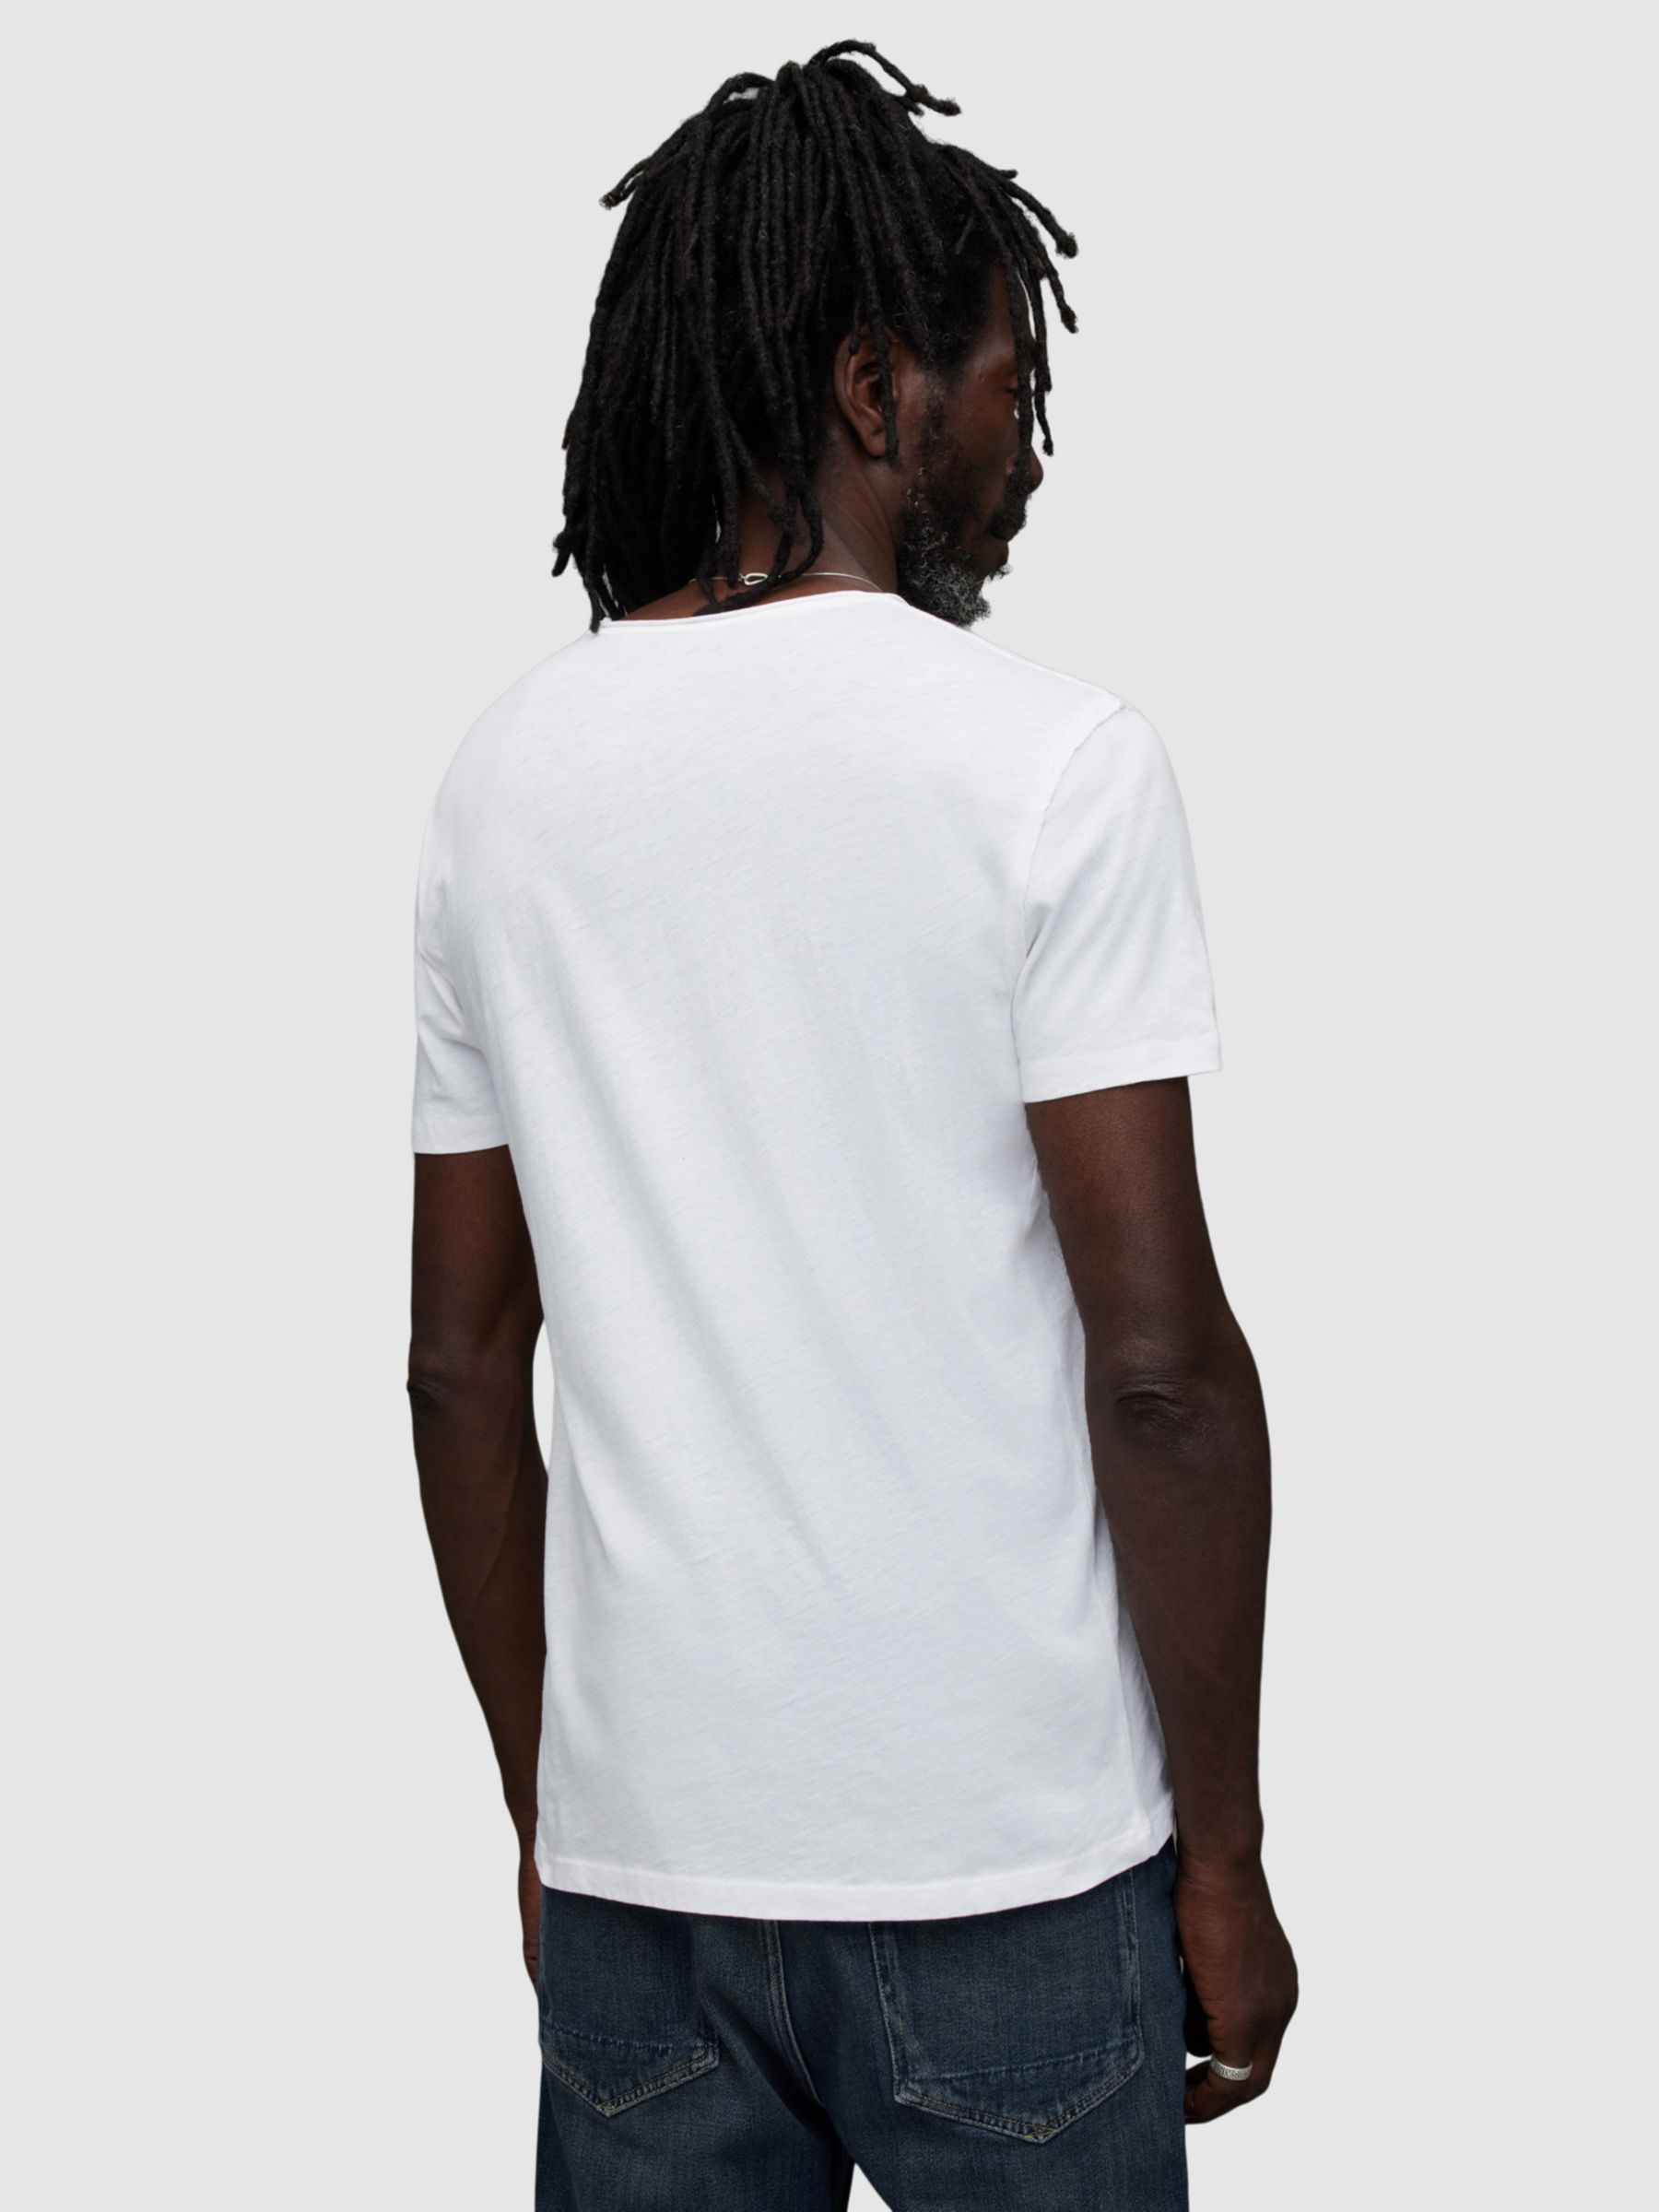 AllSaints Figure Crew T-Shirt, Optic White, XS